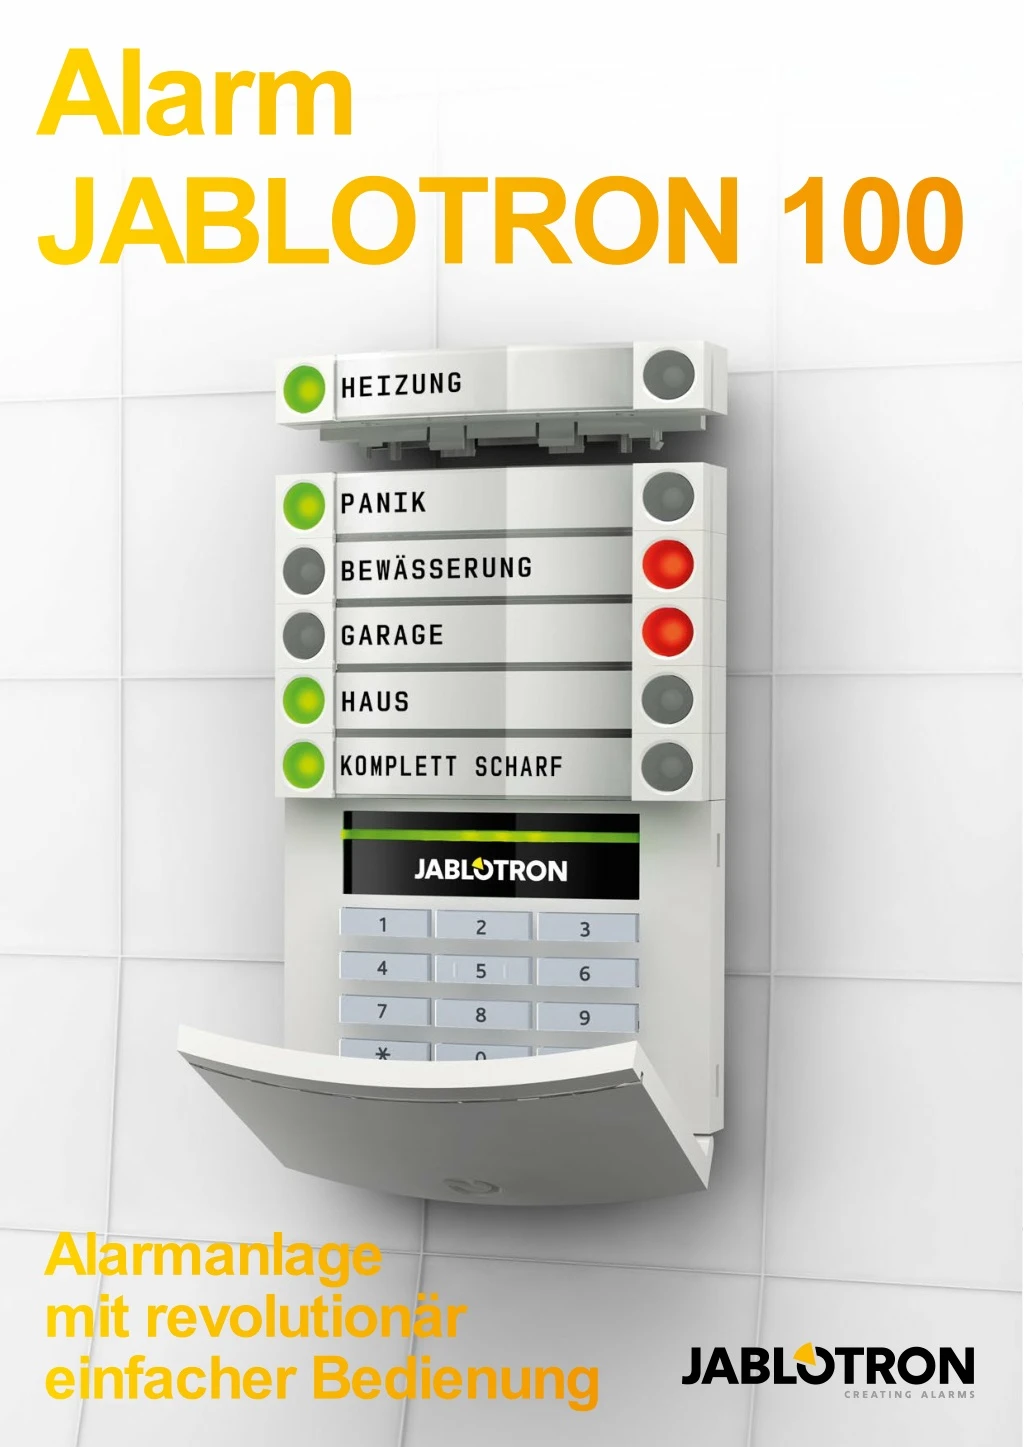 alarm jablotron 100